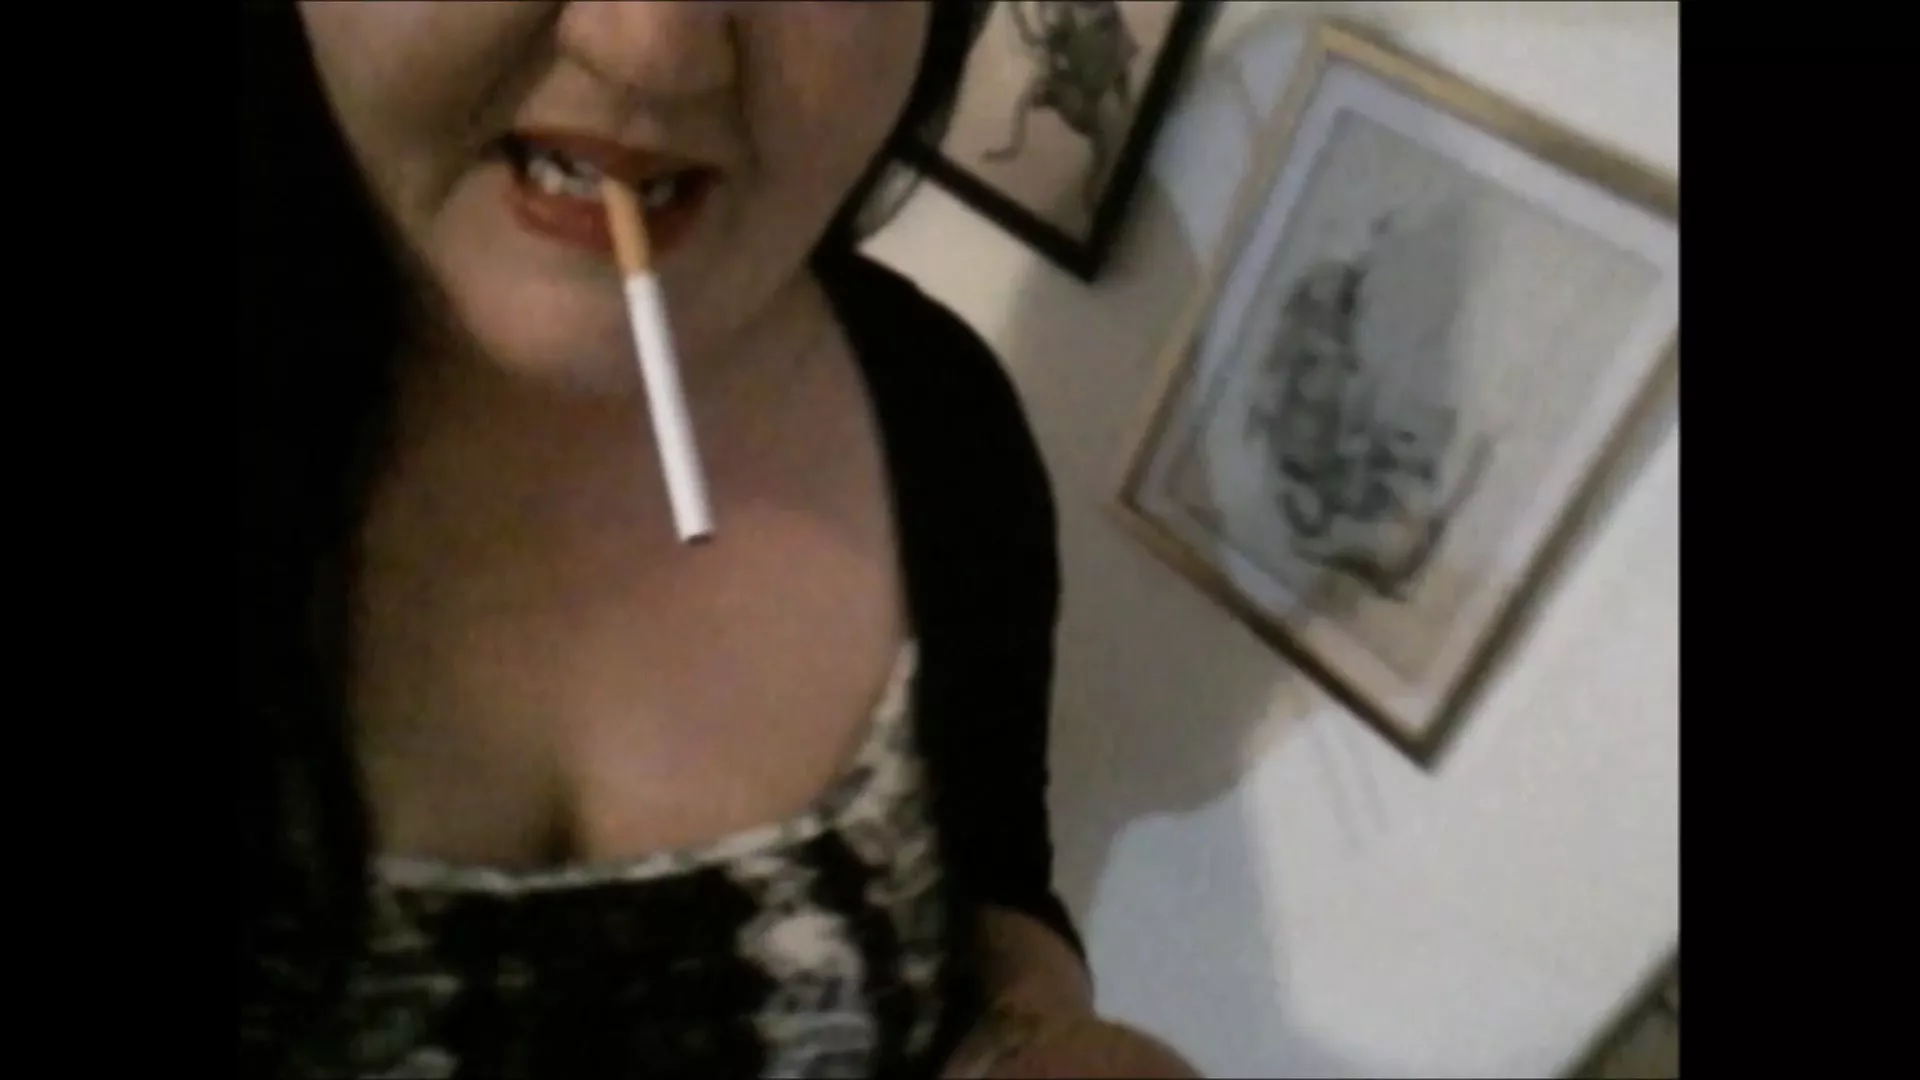 mistress strap on dildo fucking anal slut while smoking | xHamster